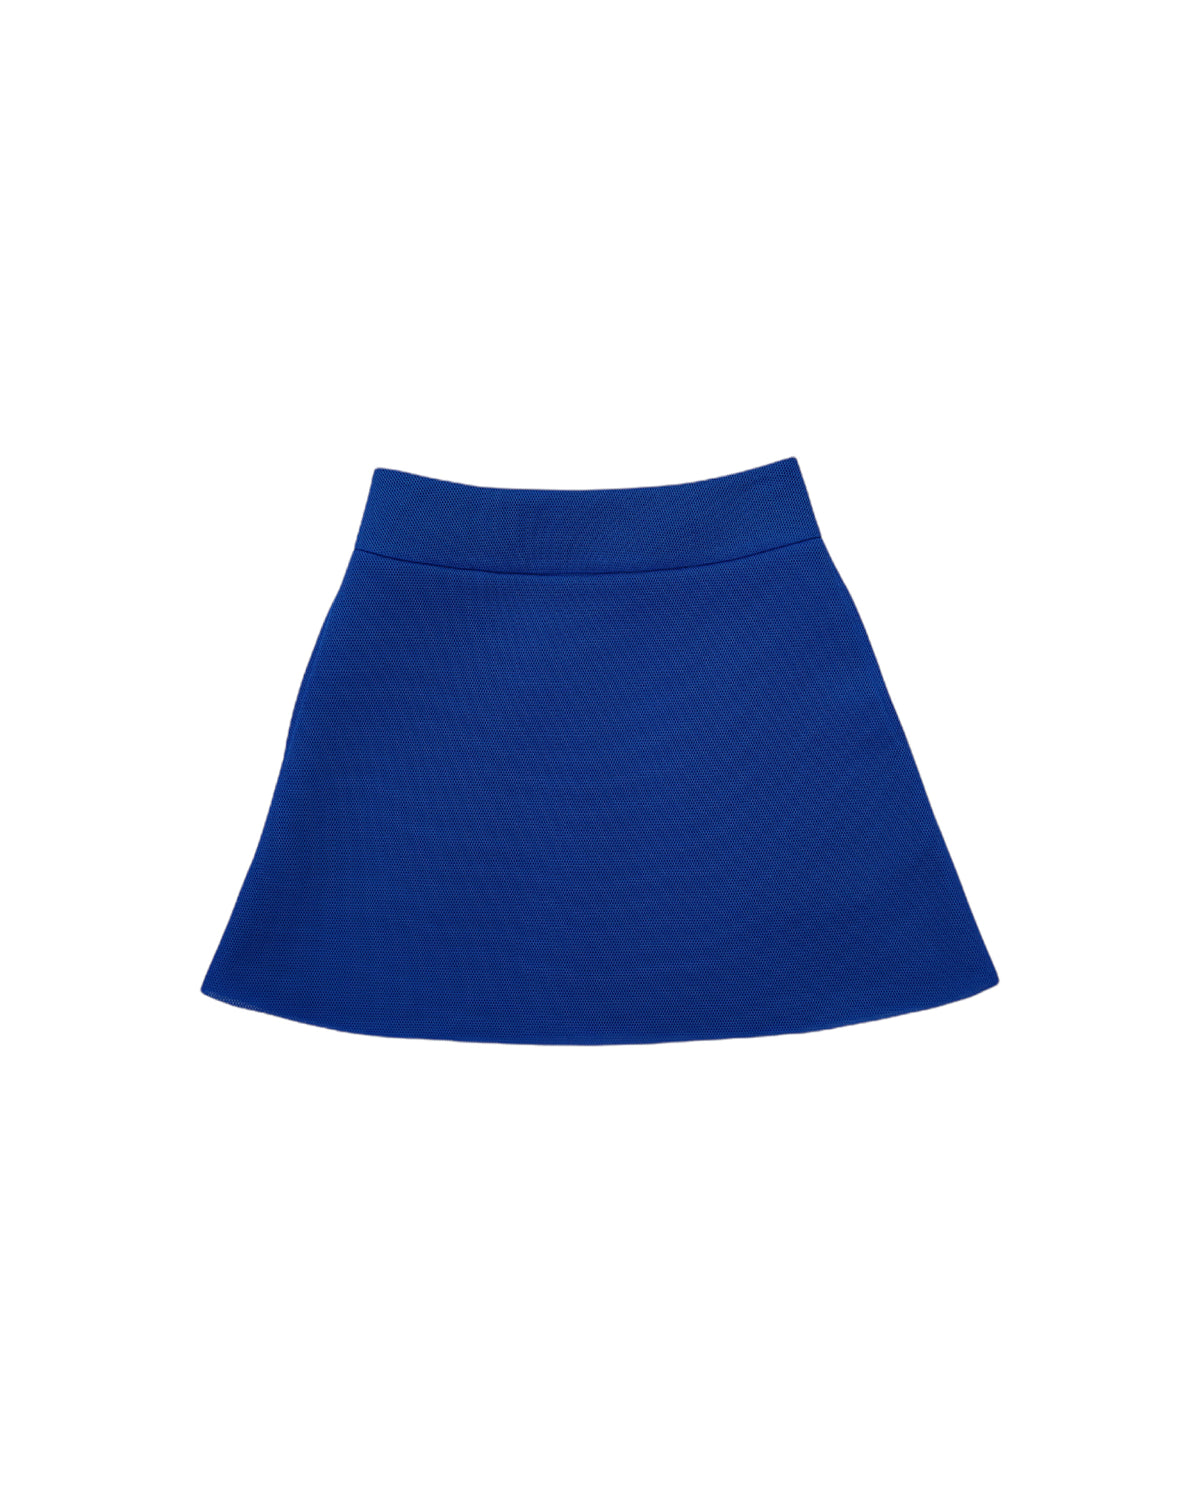 A-JANE Lolly Spongy A-Line Mini Skirt